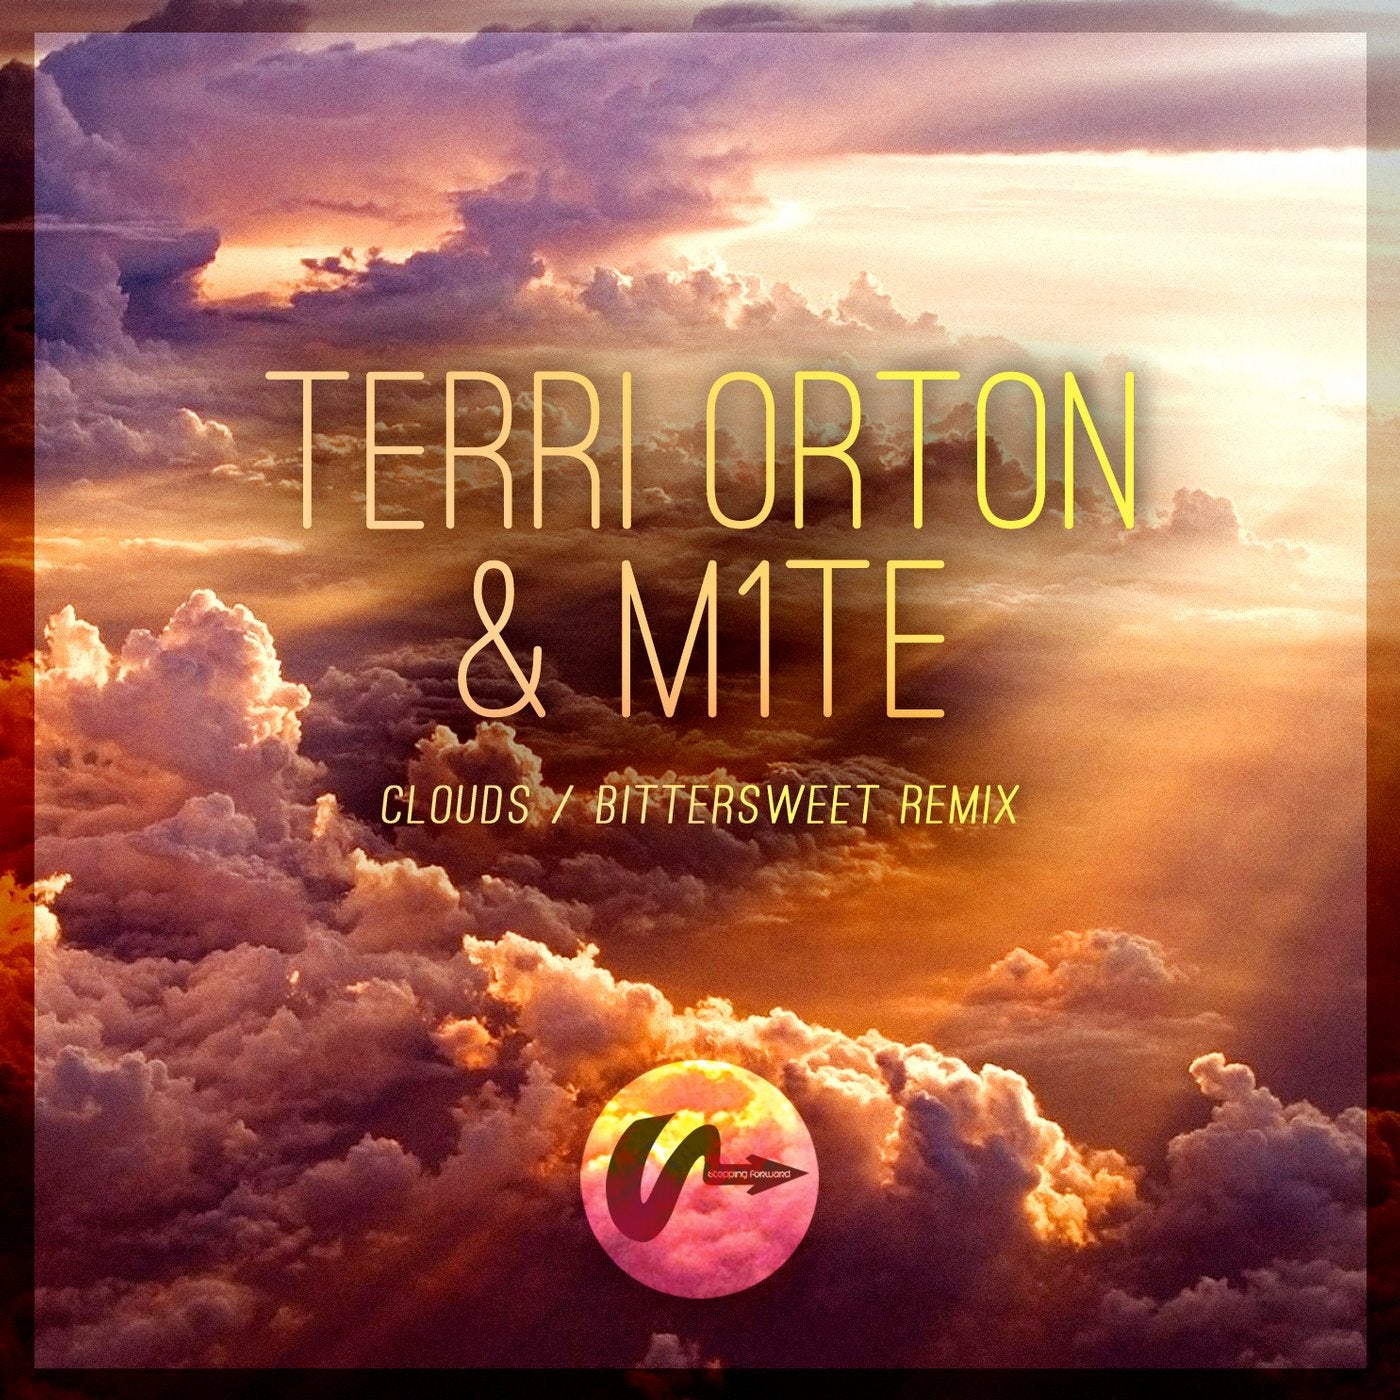 Terri Orton & M1te - Clouds / Bittersweet Remix